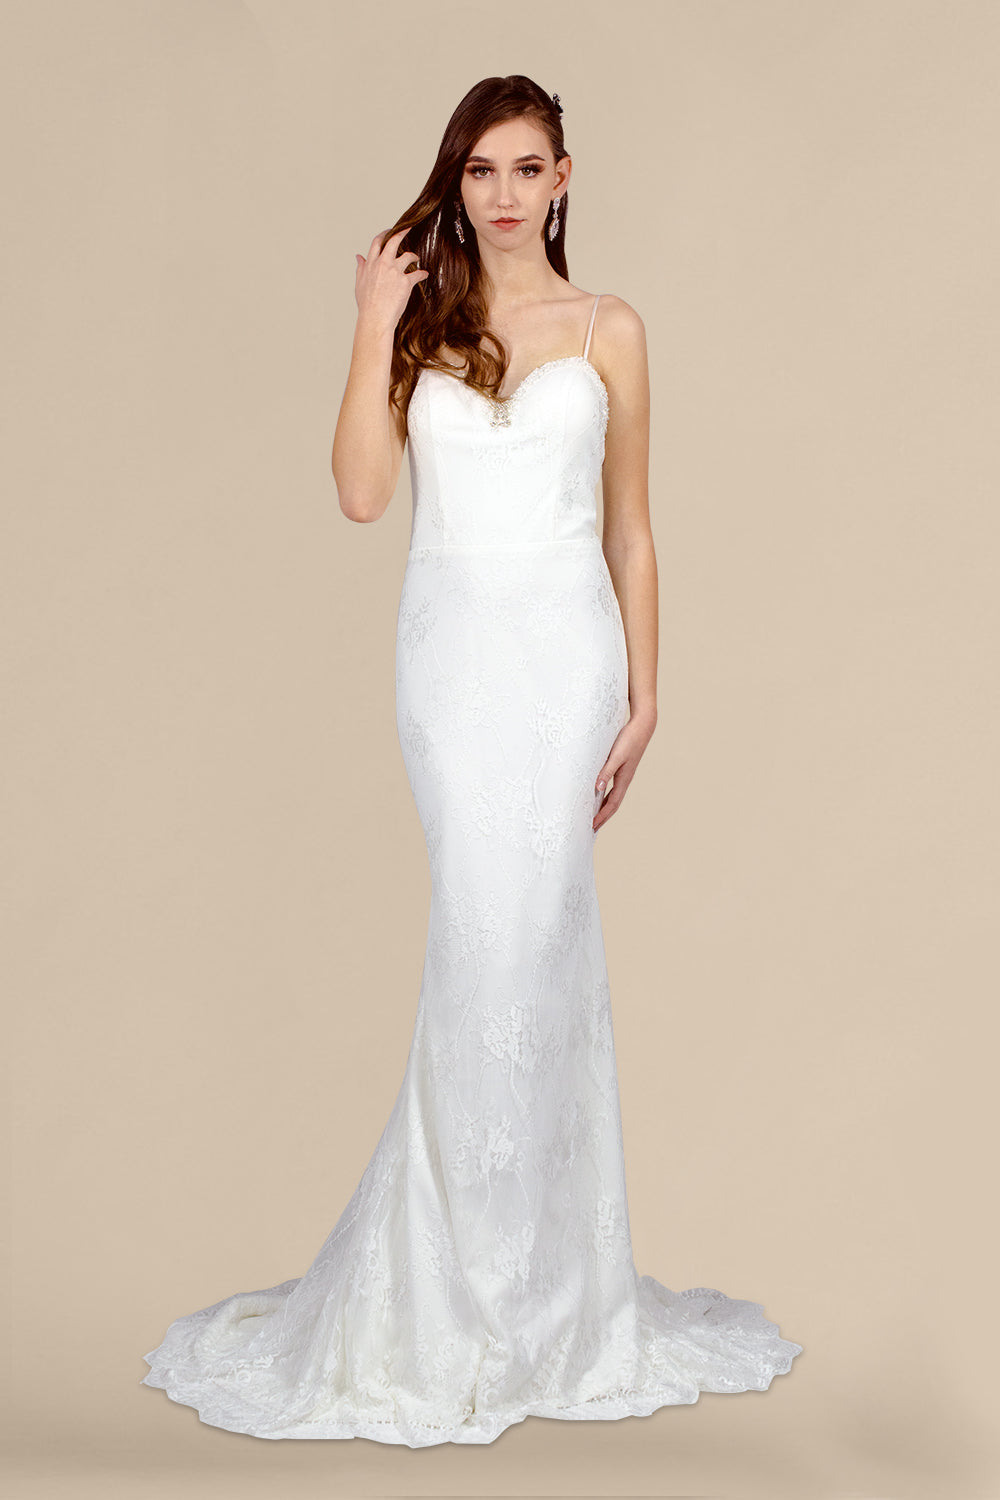 lace beach wedding dress custom made bridal perth australia envious bridal & formal